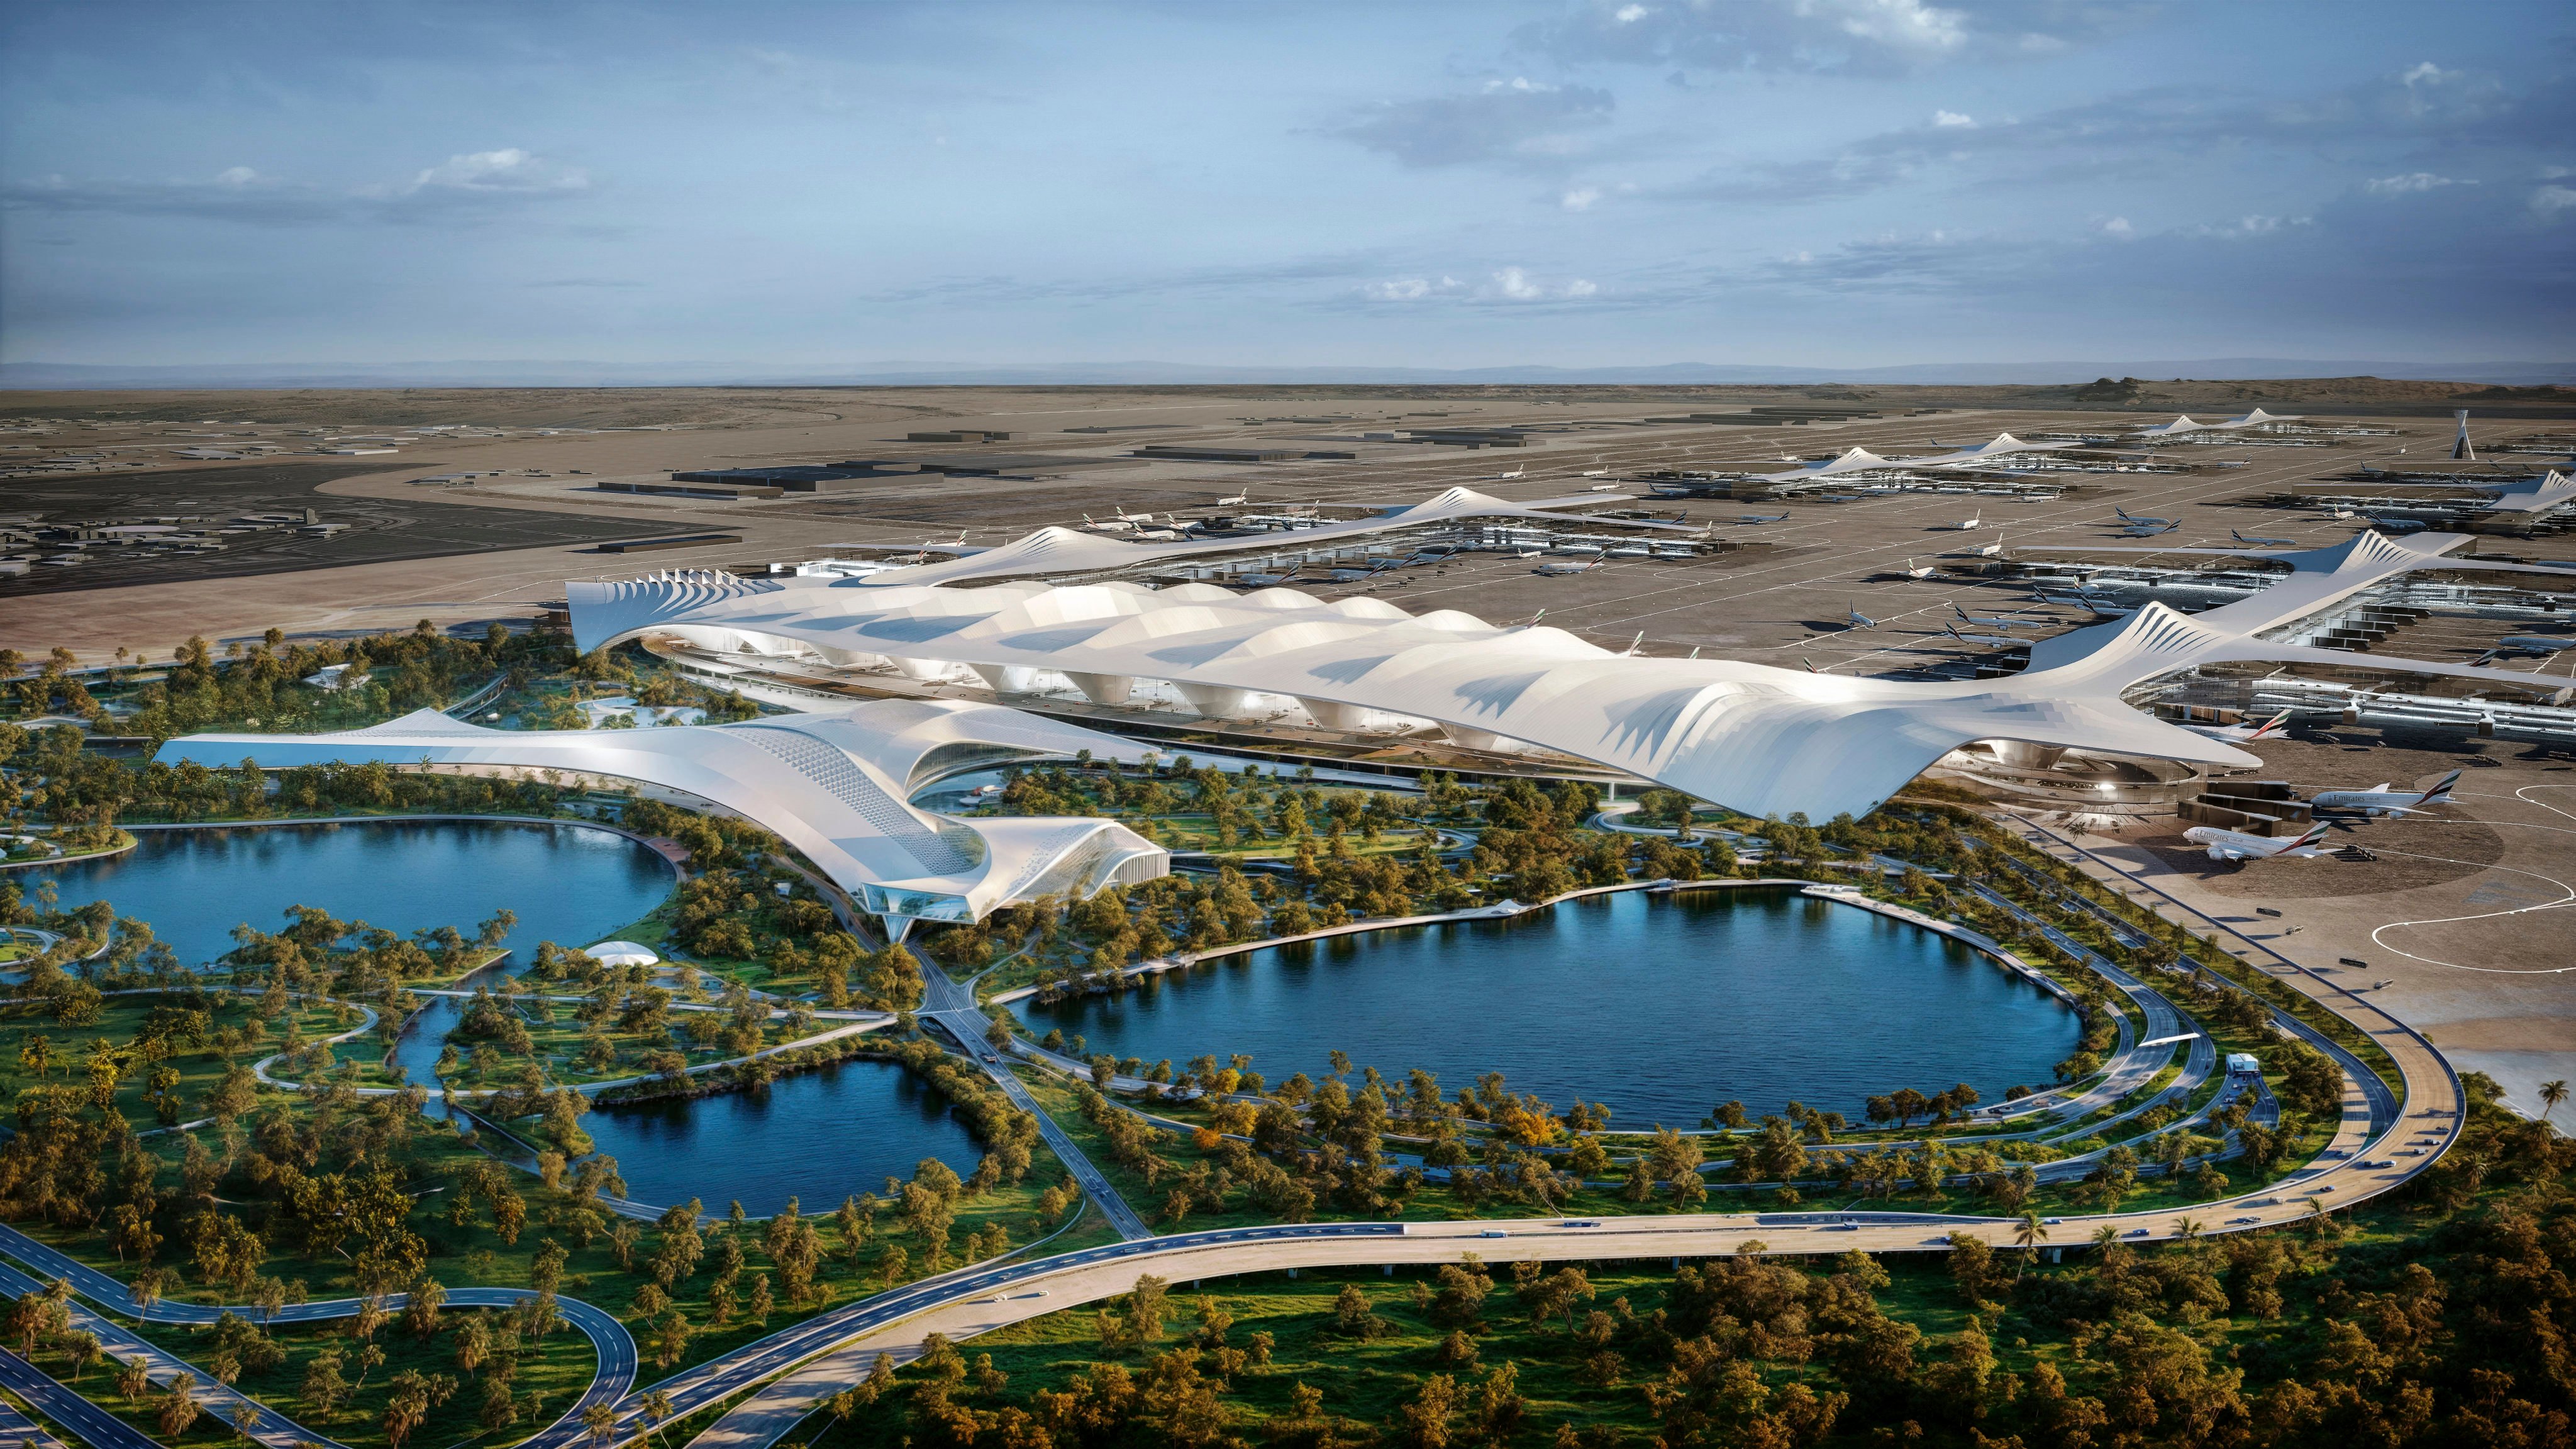 A rendering shows plans for Al Maktoum International Airport in Dubai. Photo: Dubai government via AP